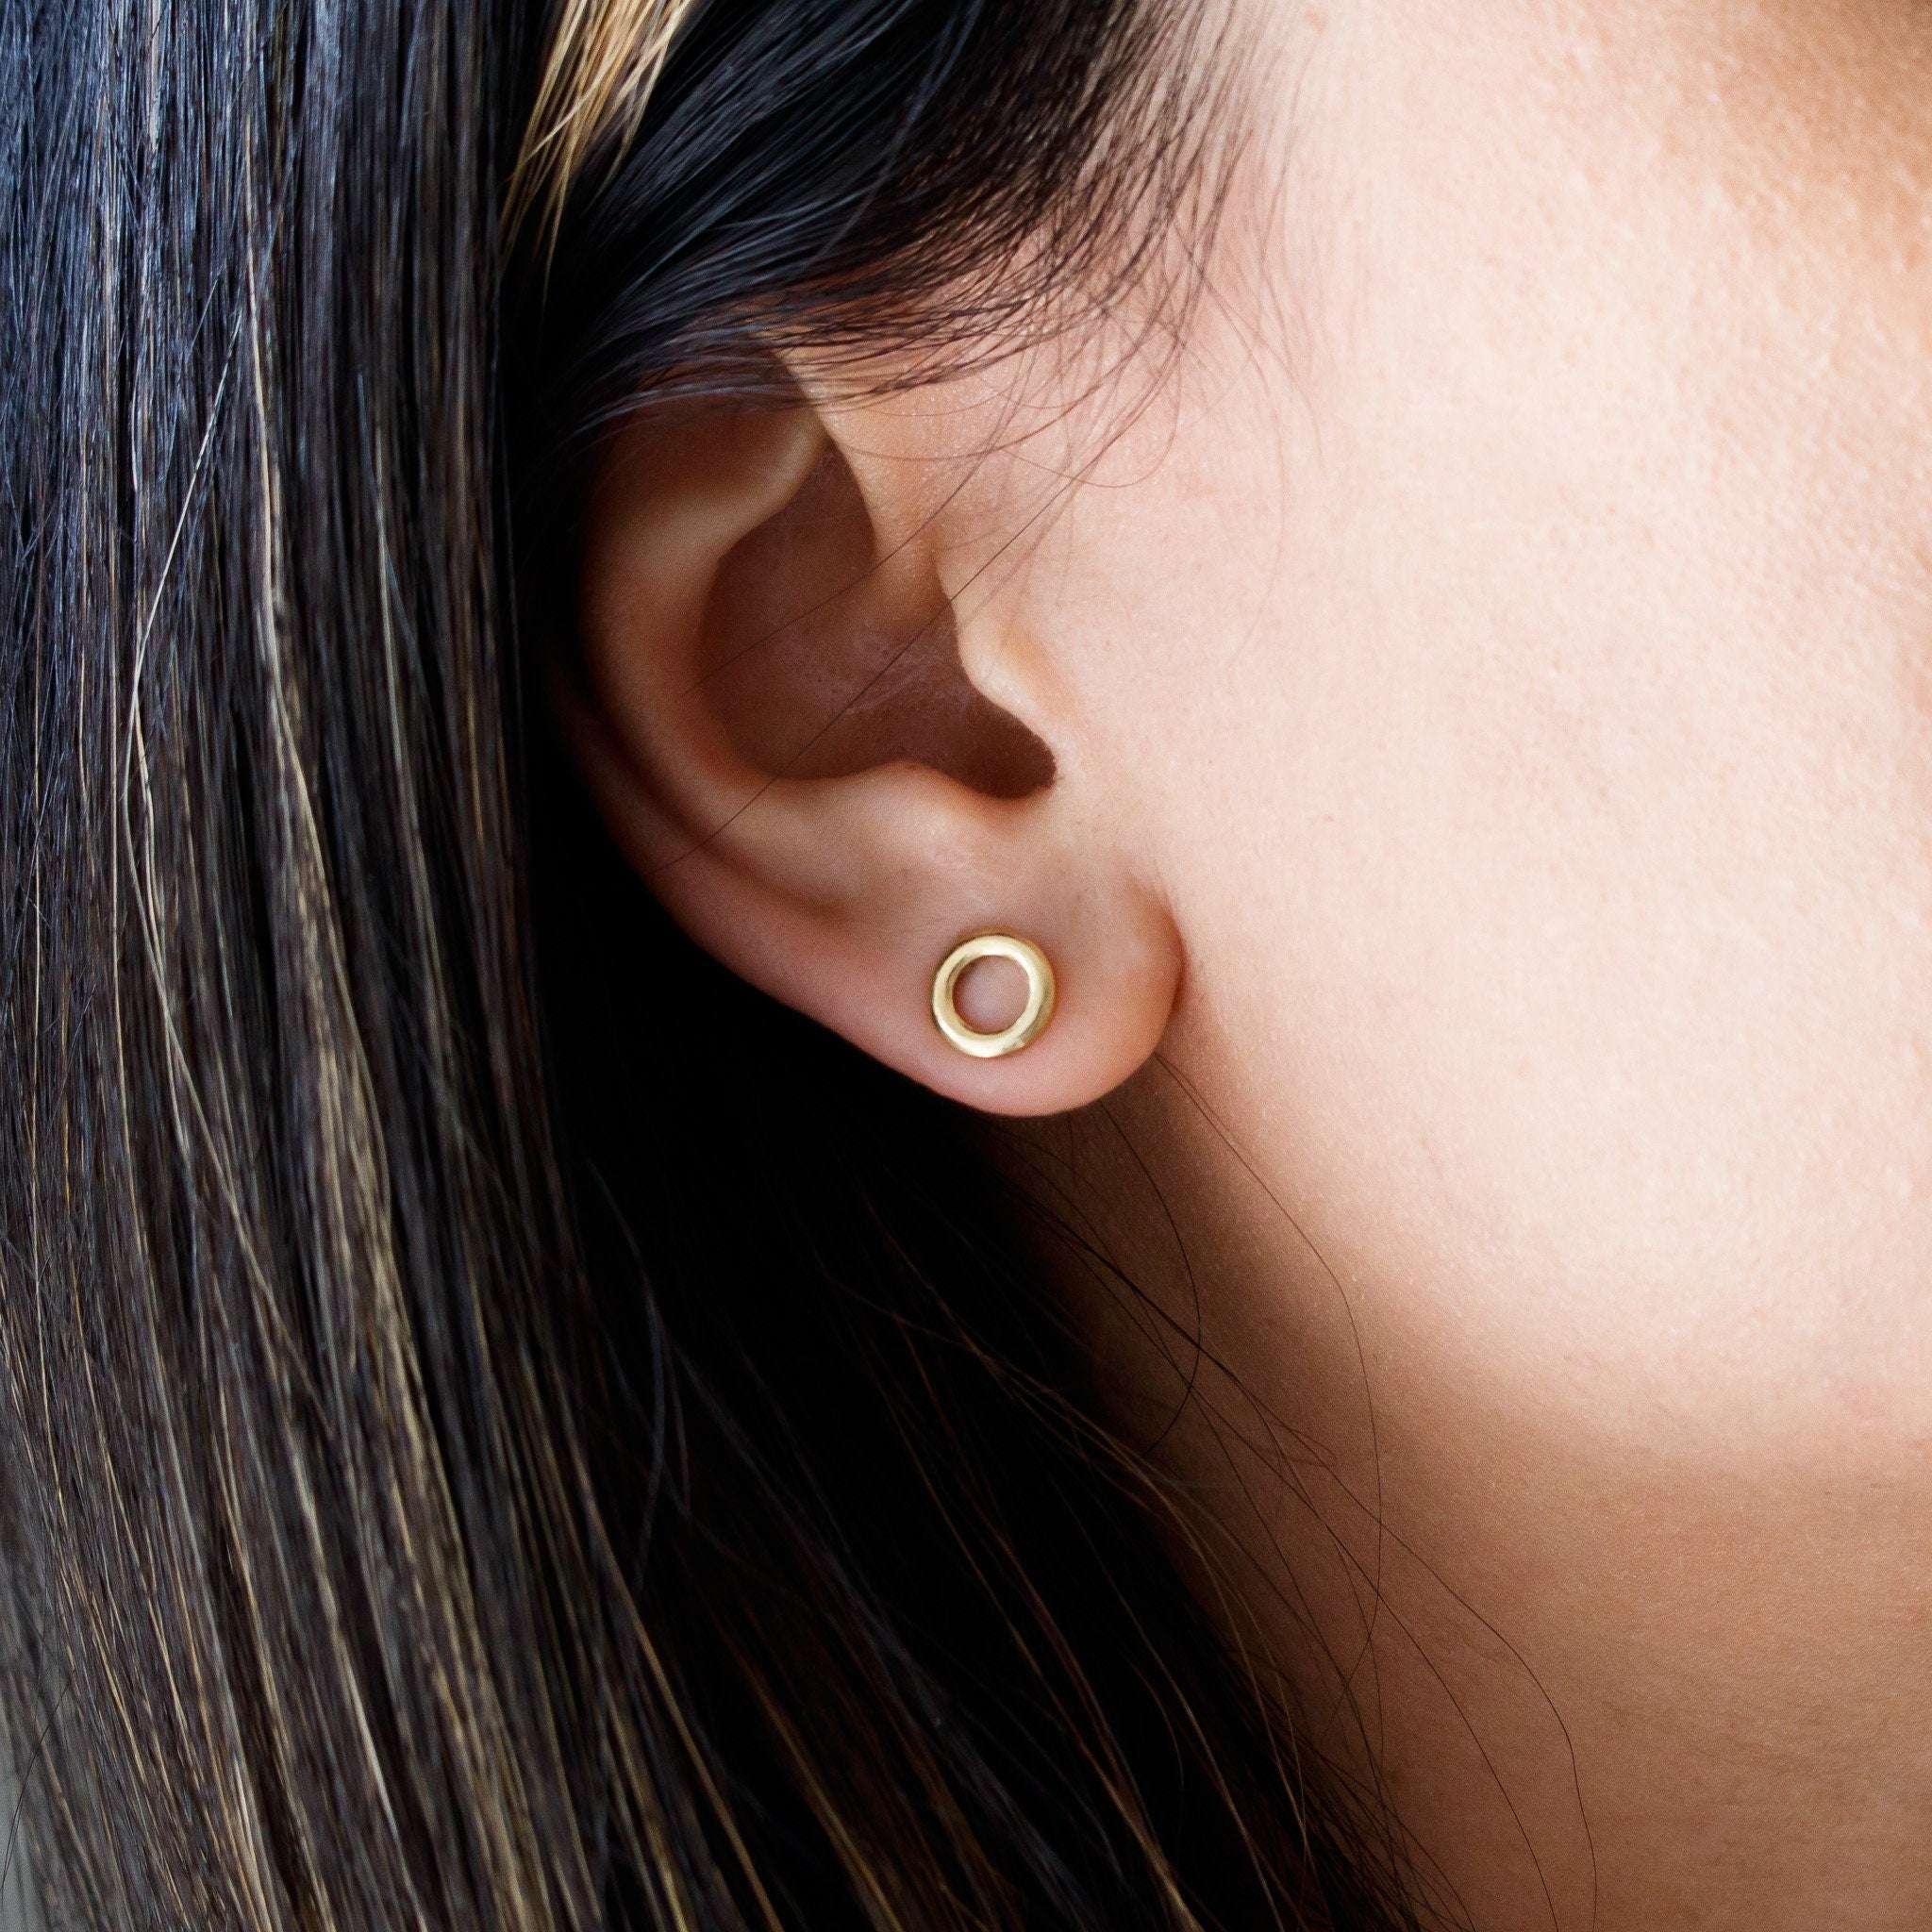 Dainty 316l stainless steel earrings -  Gold Stud Open Circle Earring -  sister gift - Best Friend Present - Stud earring